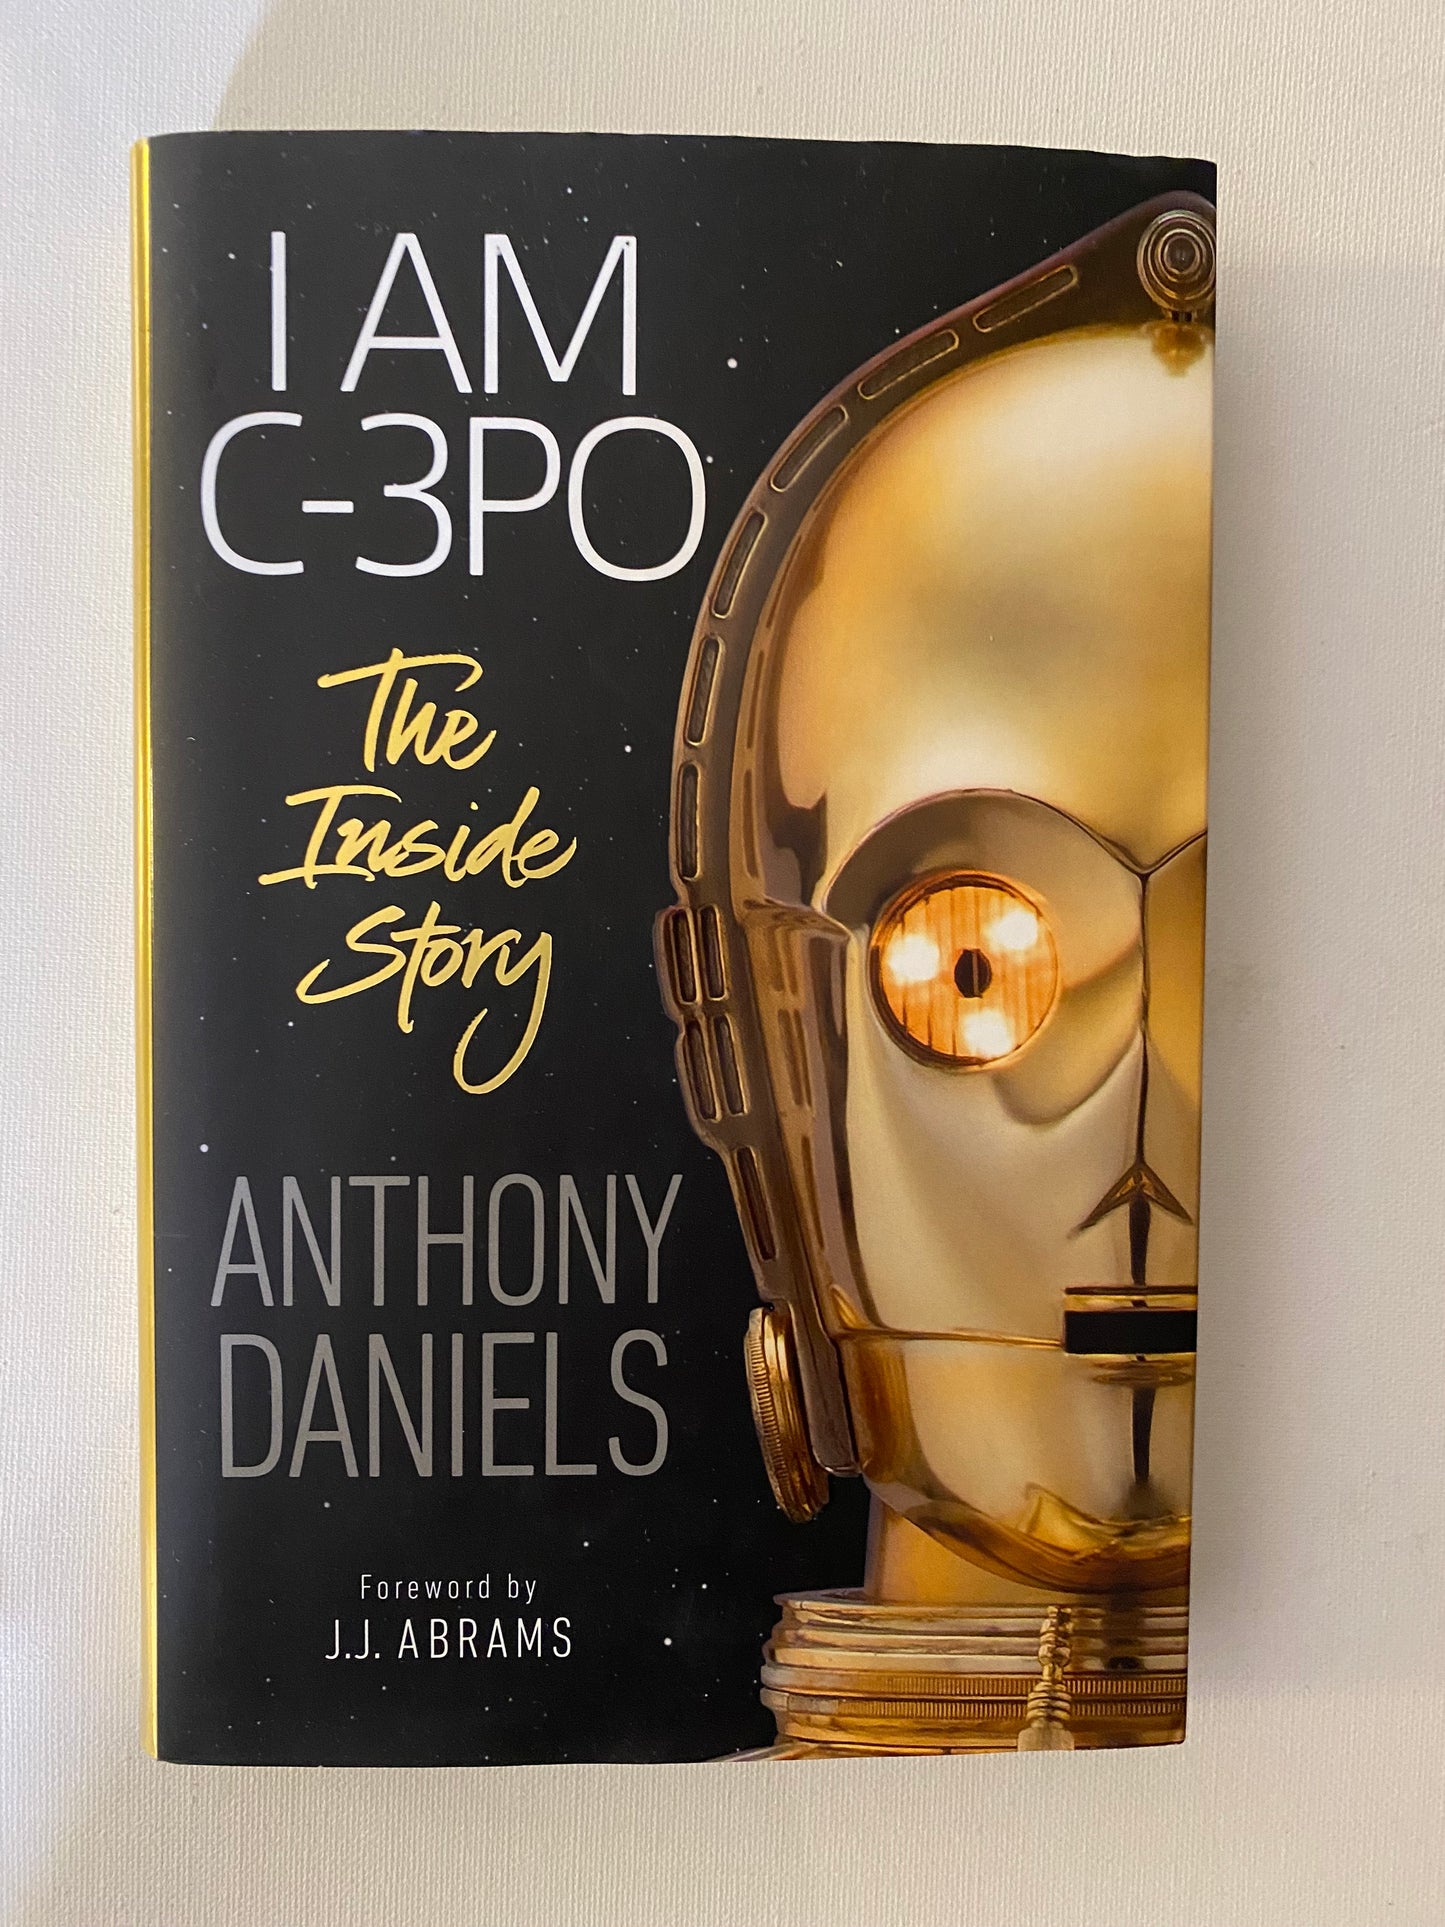 I am C-3PO by Anthony Daniels